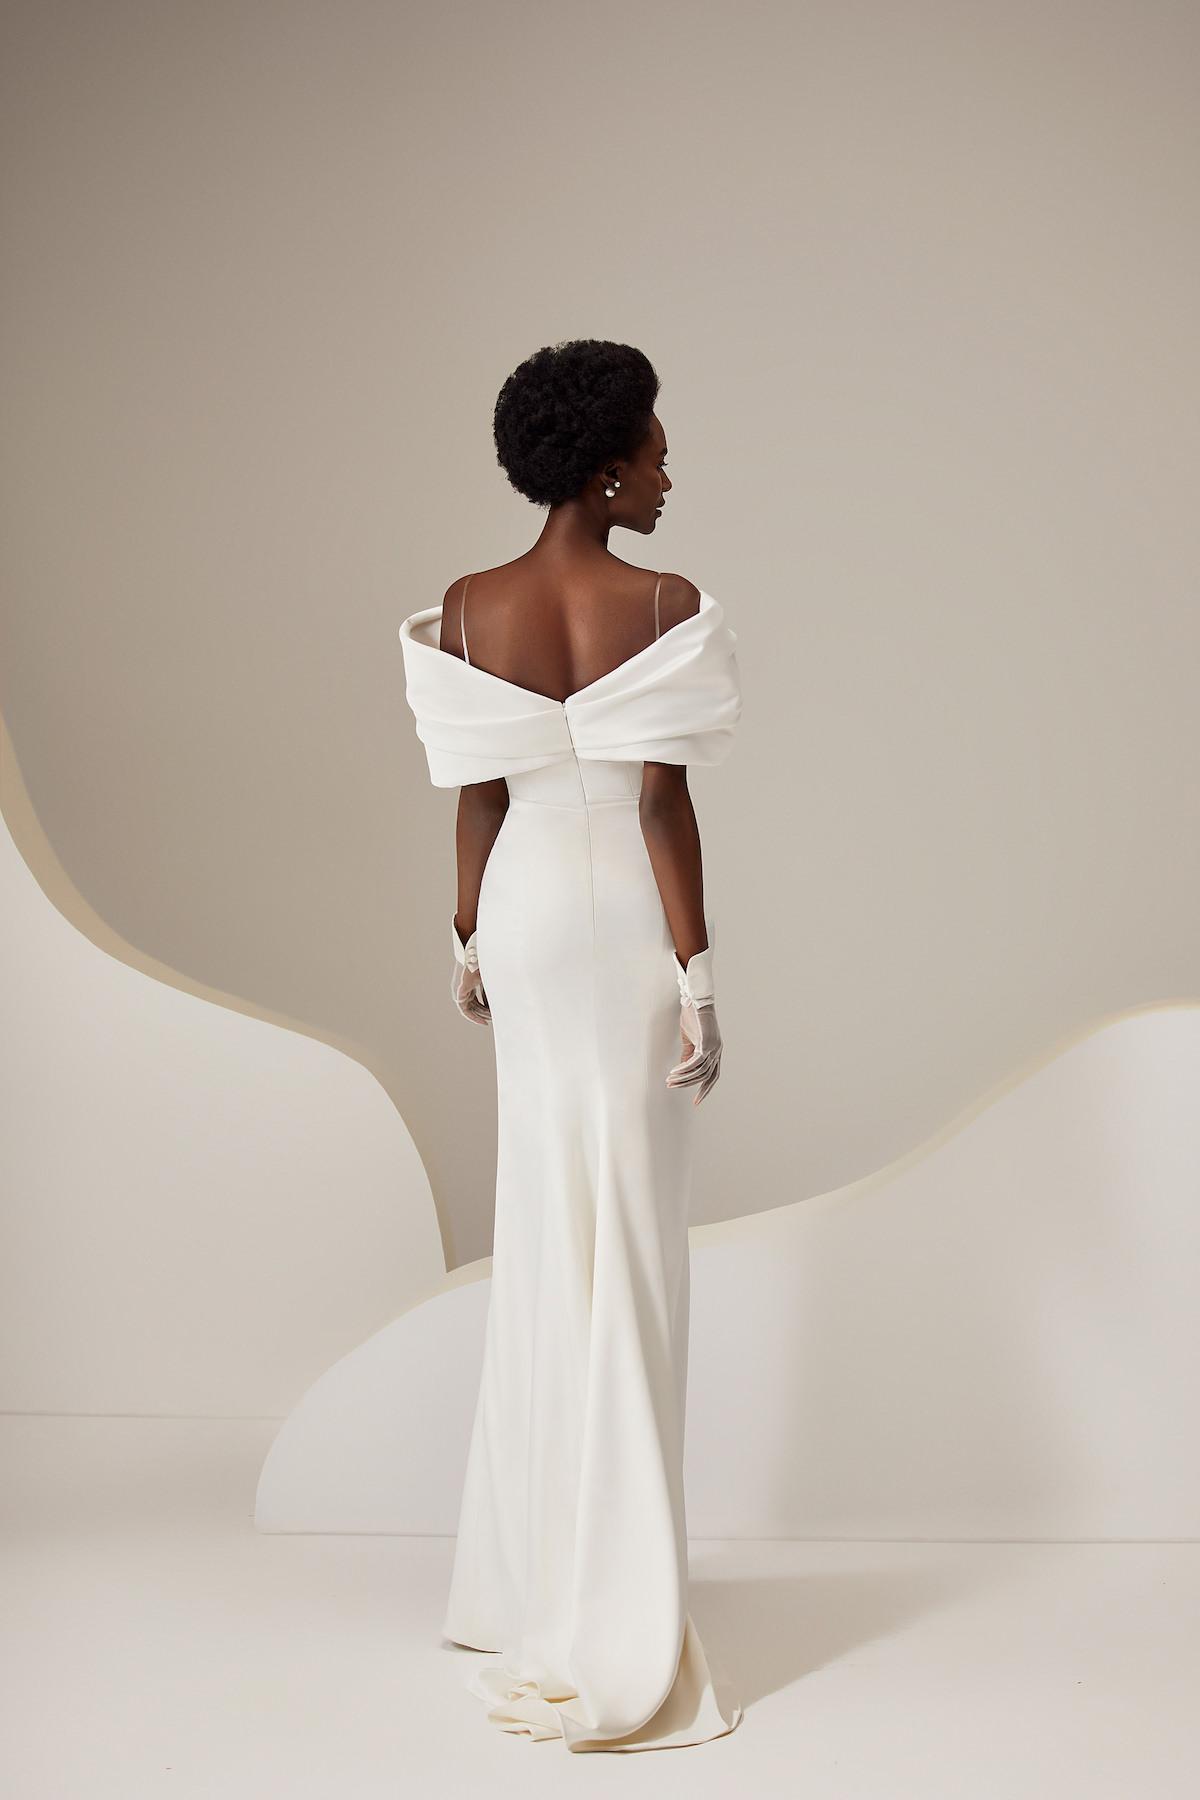 2022 Wedding Dress Trends by Milla Nova - Muse white lace day 22620